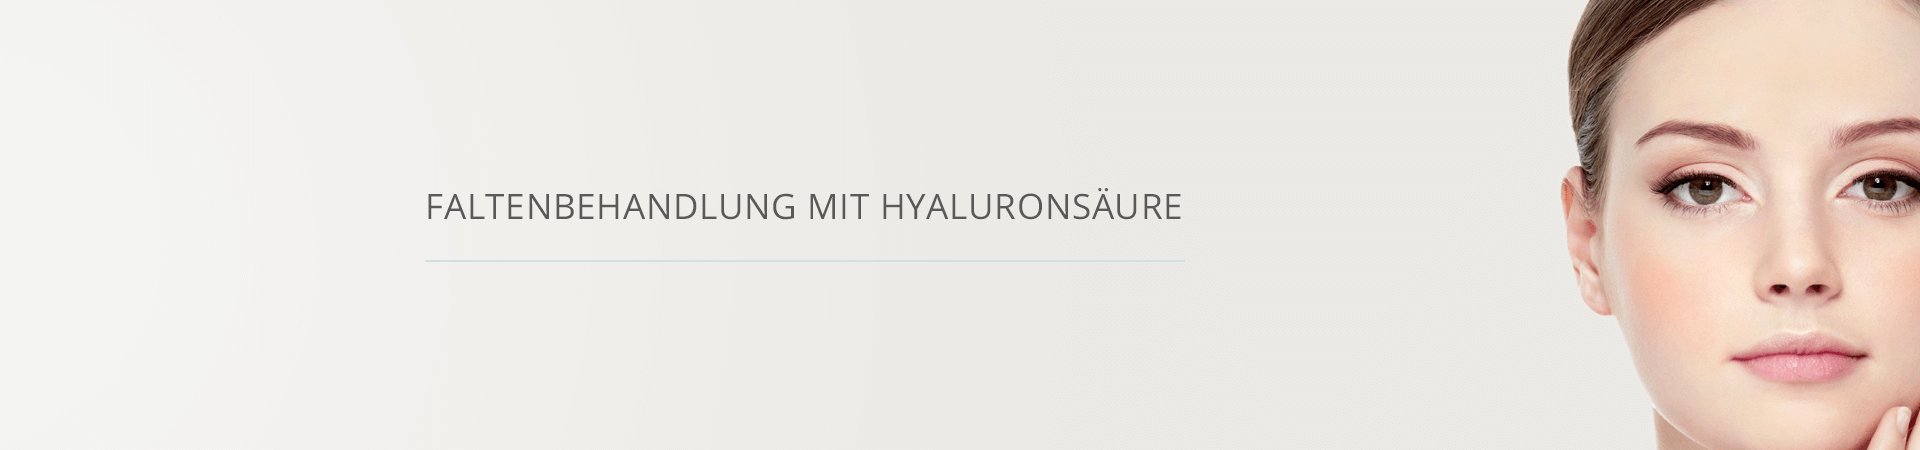 Faltenbehandlung Hyaluronsäure, Plastische Chirurgie Berlin, AesthetiCum, Dr. Ahrens, Dr. Fritzsch 